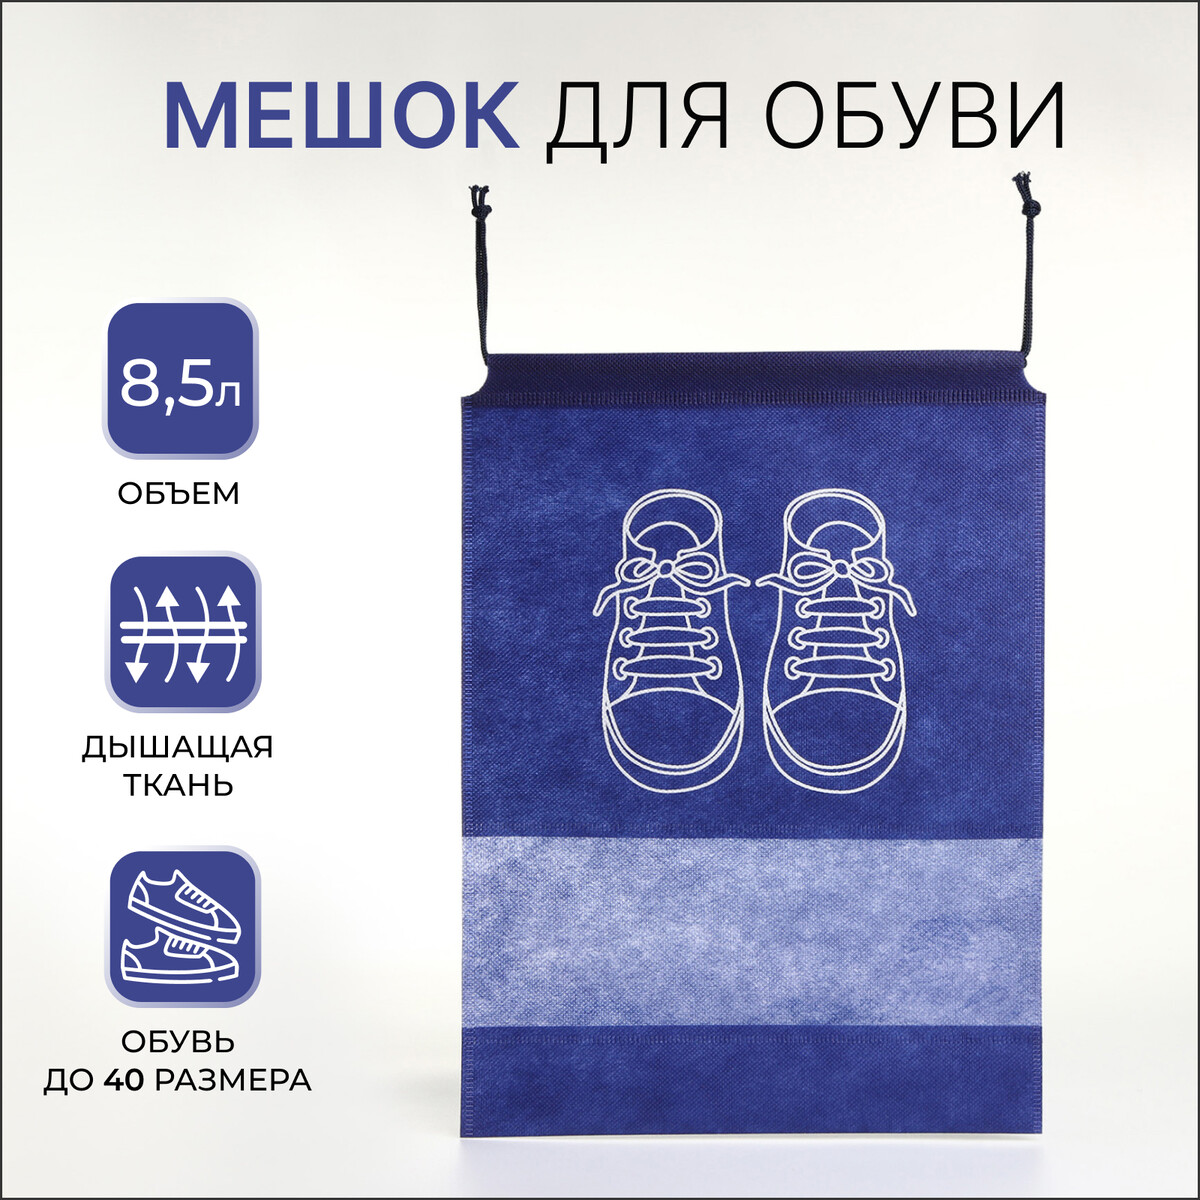 Мешок для обуви на шнурке, цвет синий мешок для обуви на шнурке синий